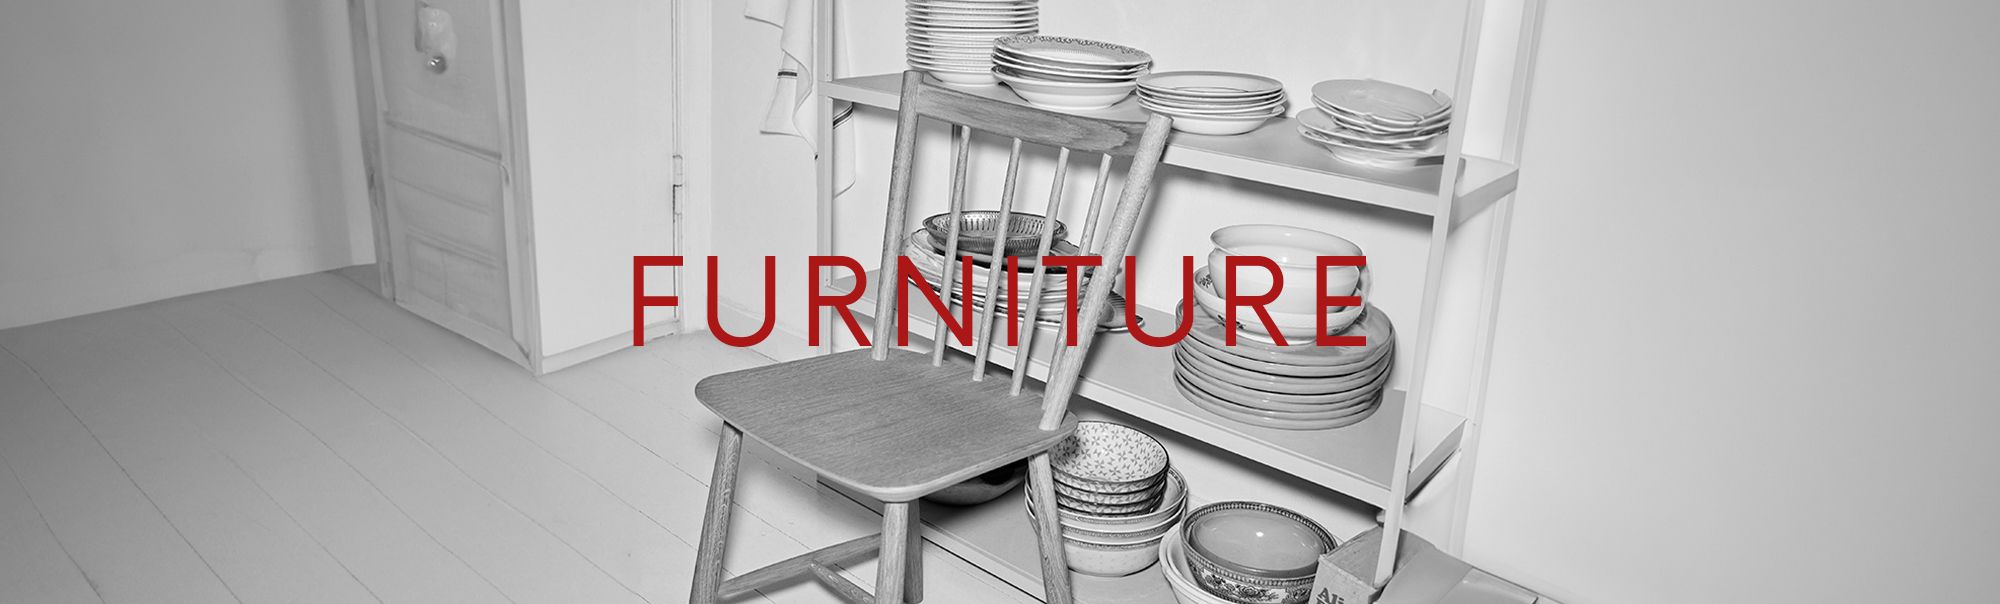 Furniture Sale at Byflou.com